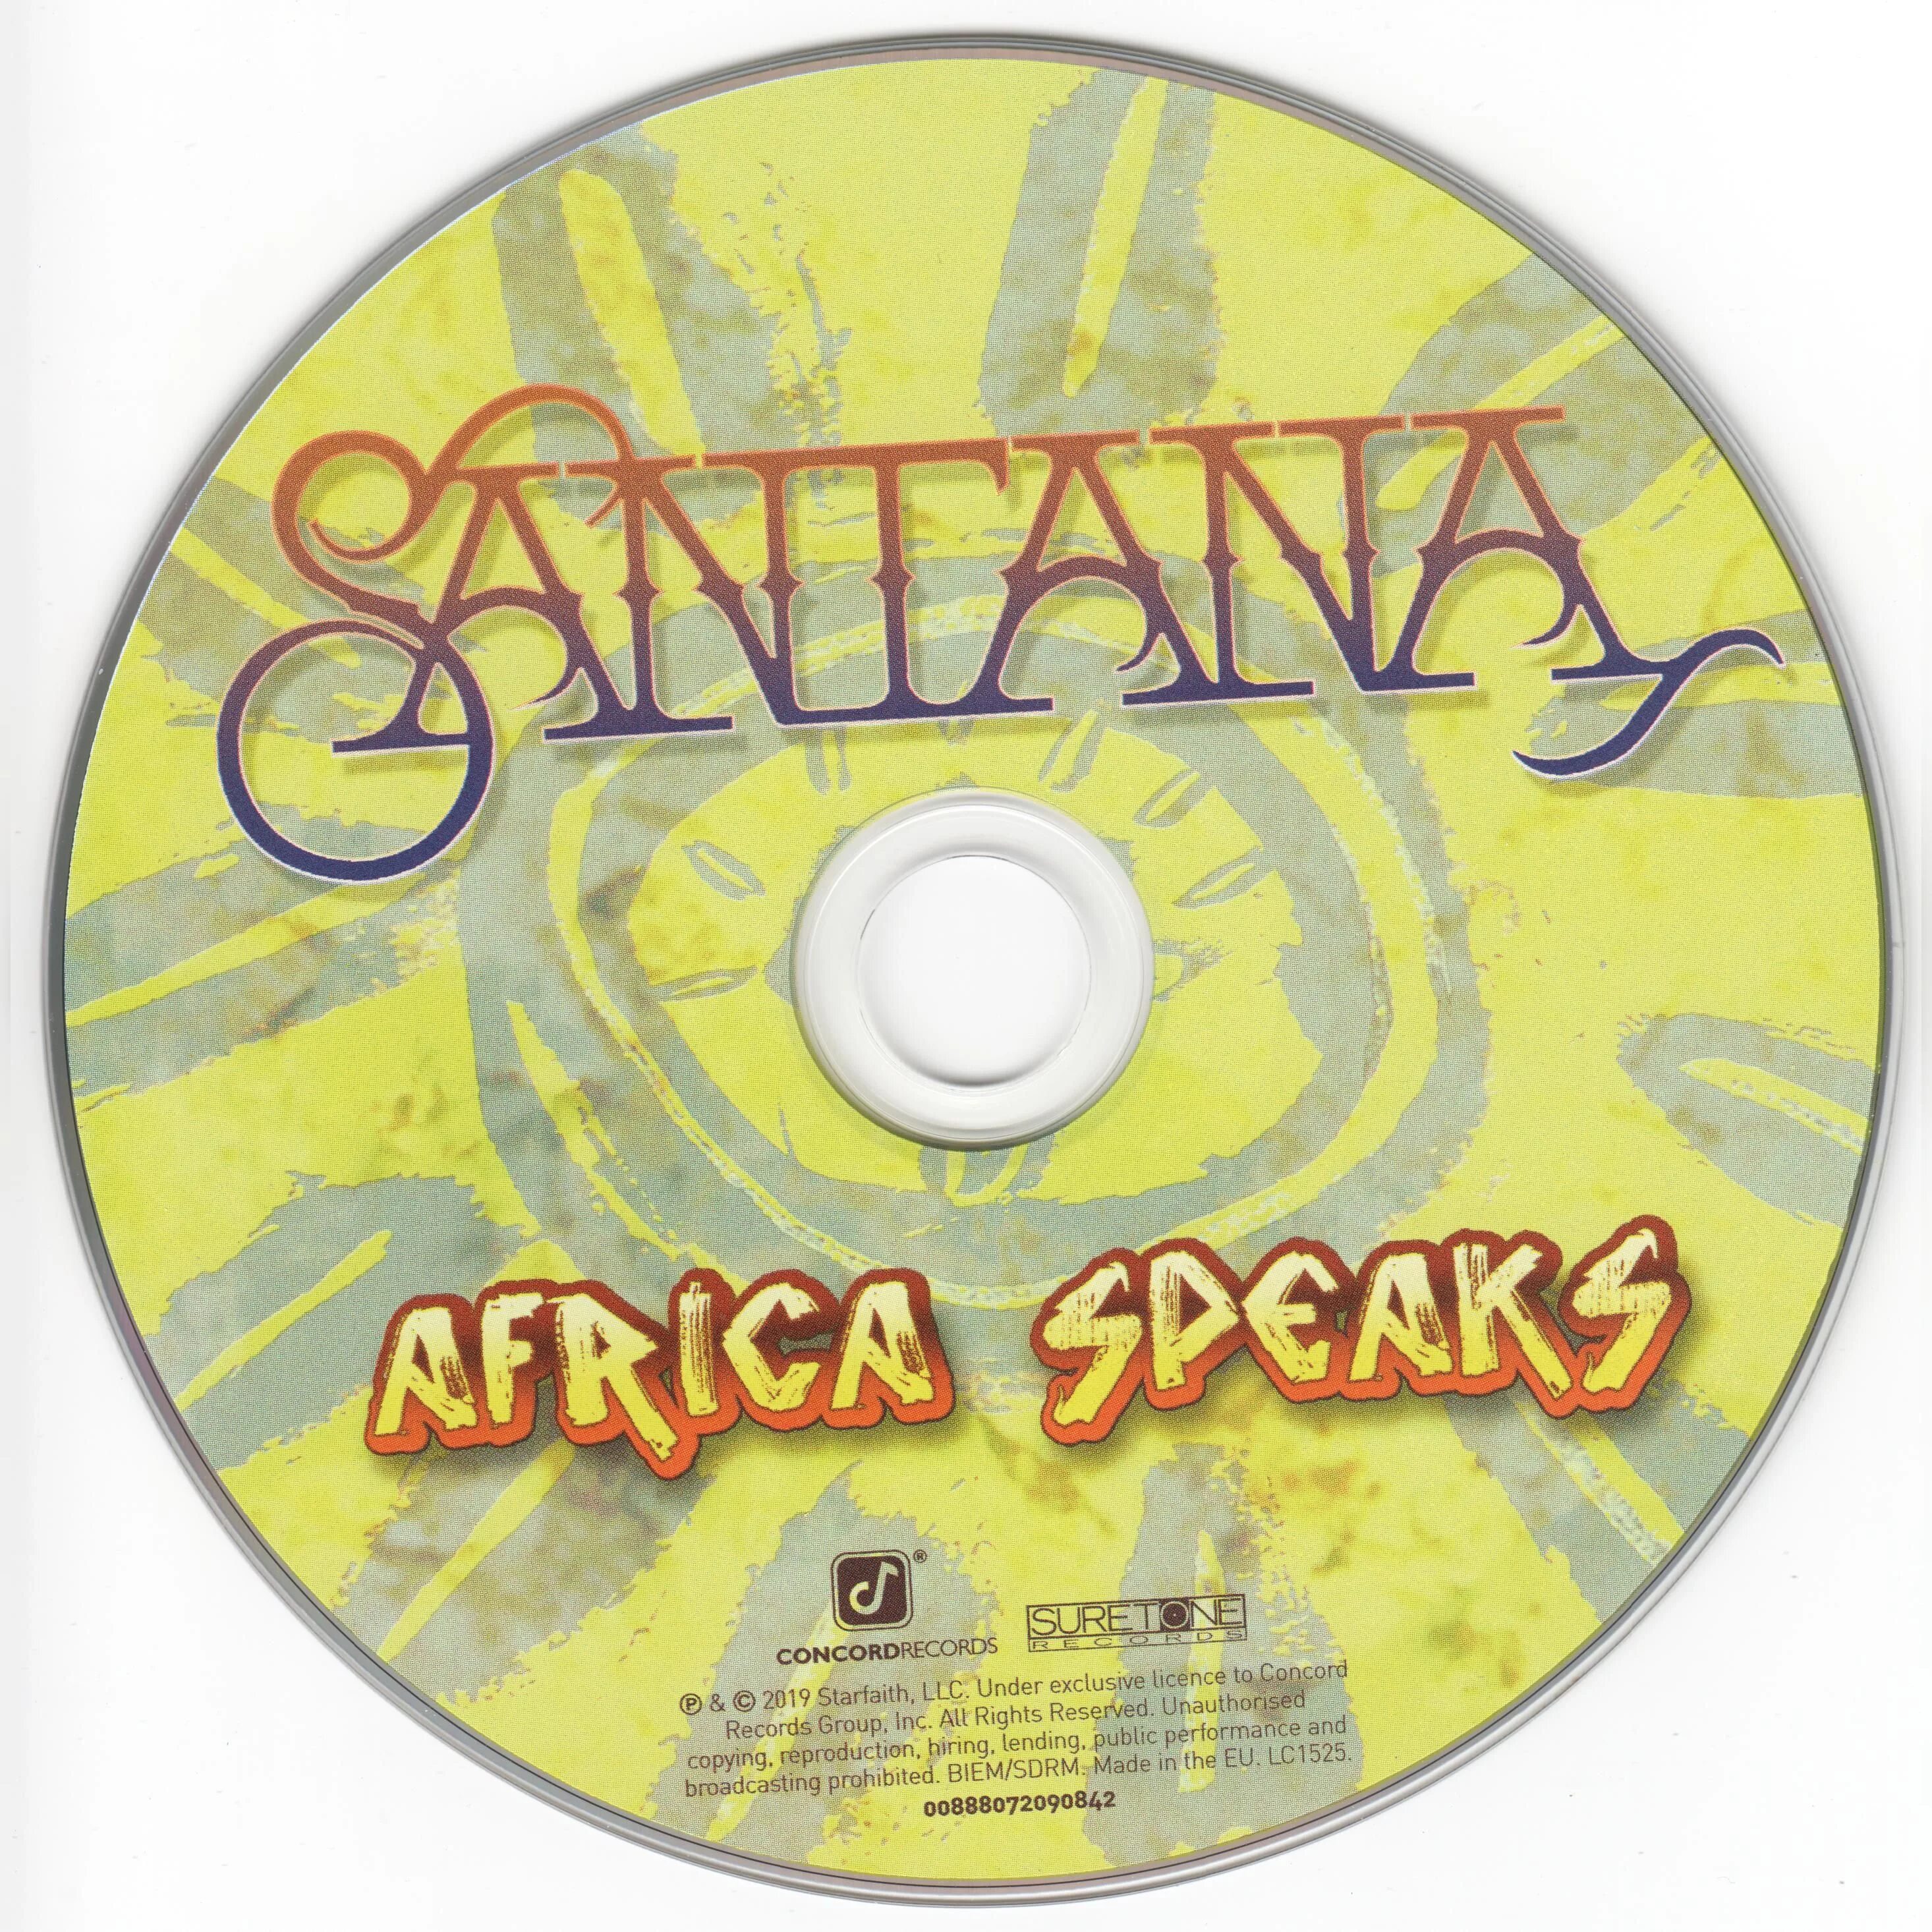 Santana Africa speaks 2019. CD Santana: Africa speaks. Santana "Shango, CD". LP Santana: Africa speaks. Speak mp3